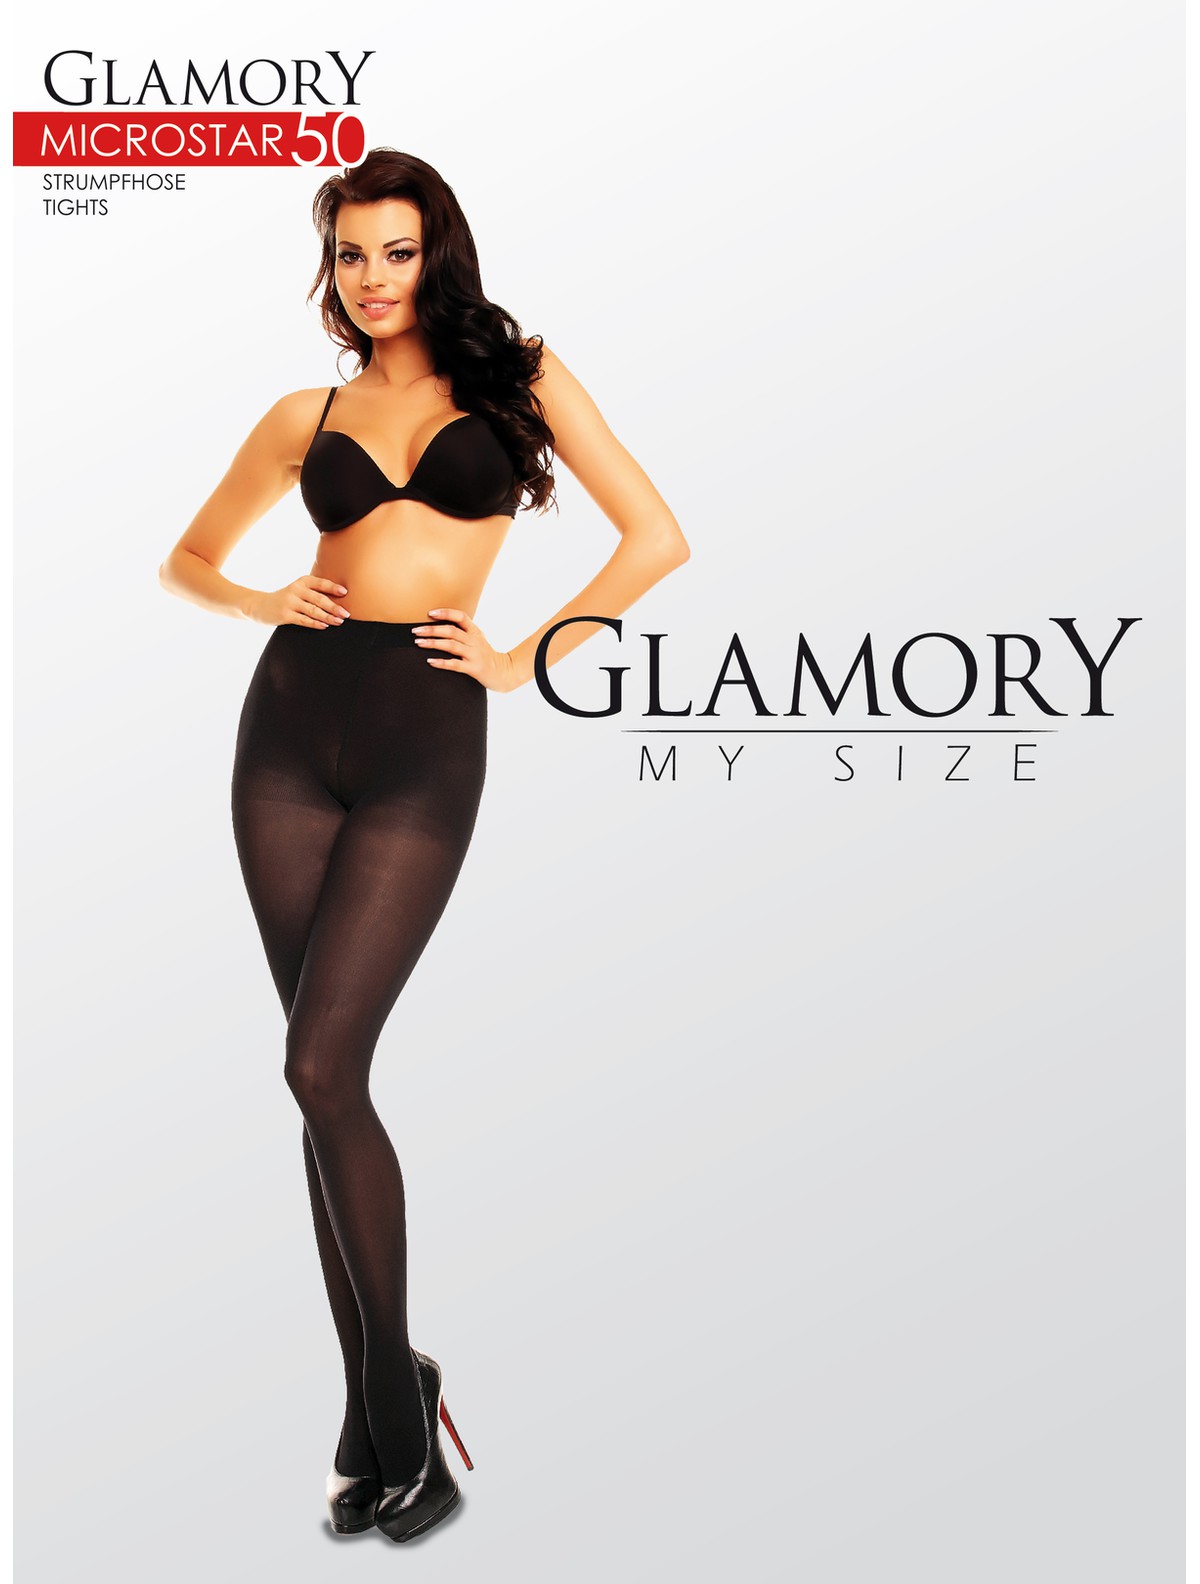 Glamory Microstar 50 Strumpfhose - schwarz